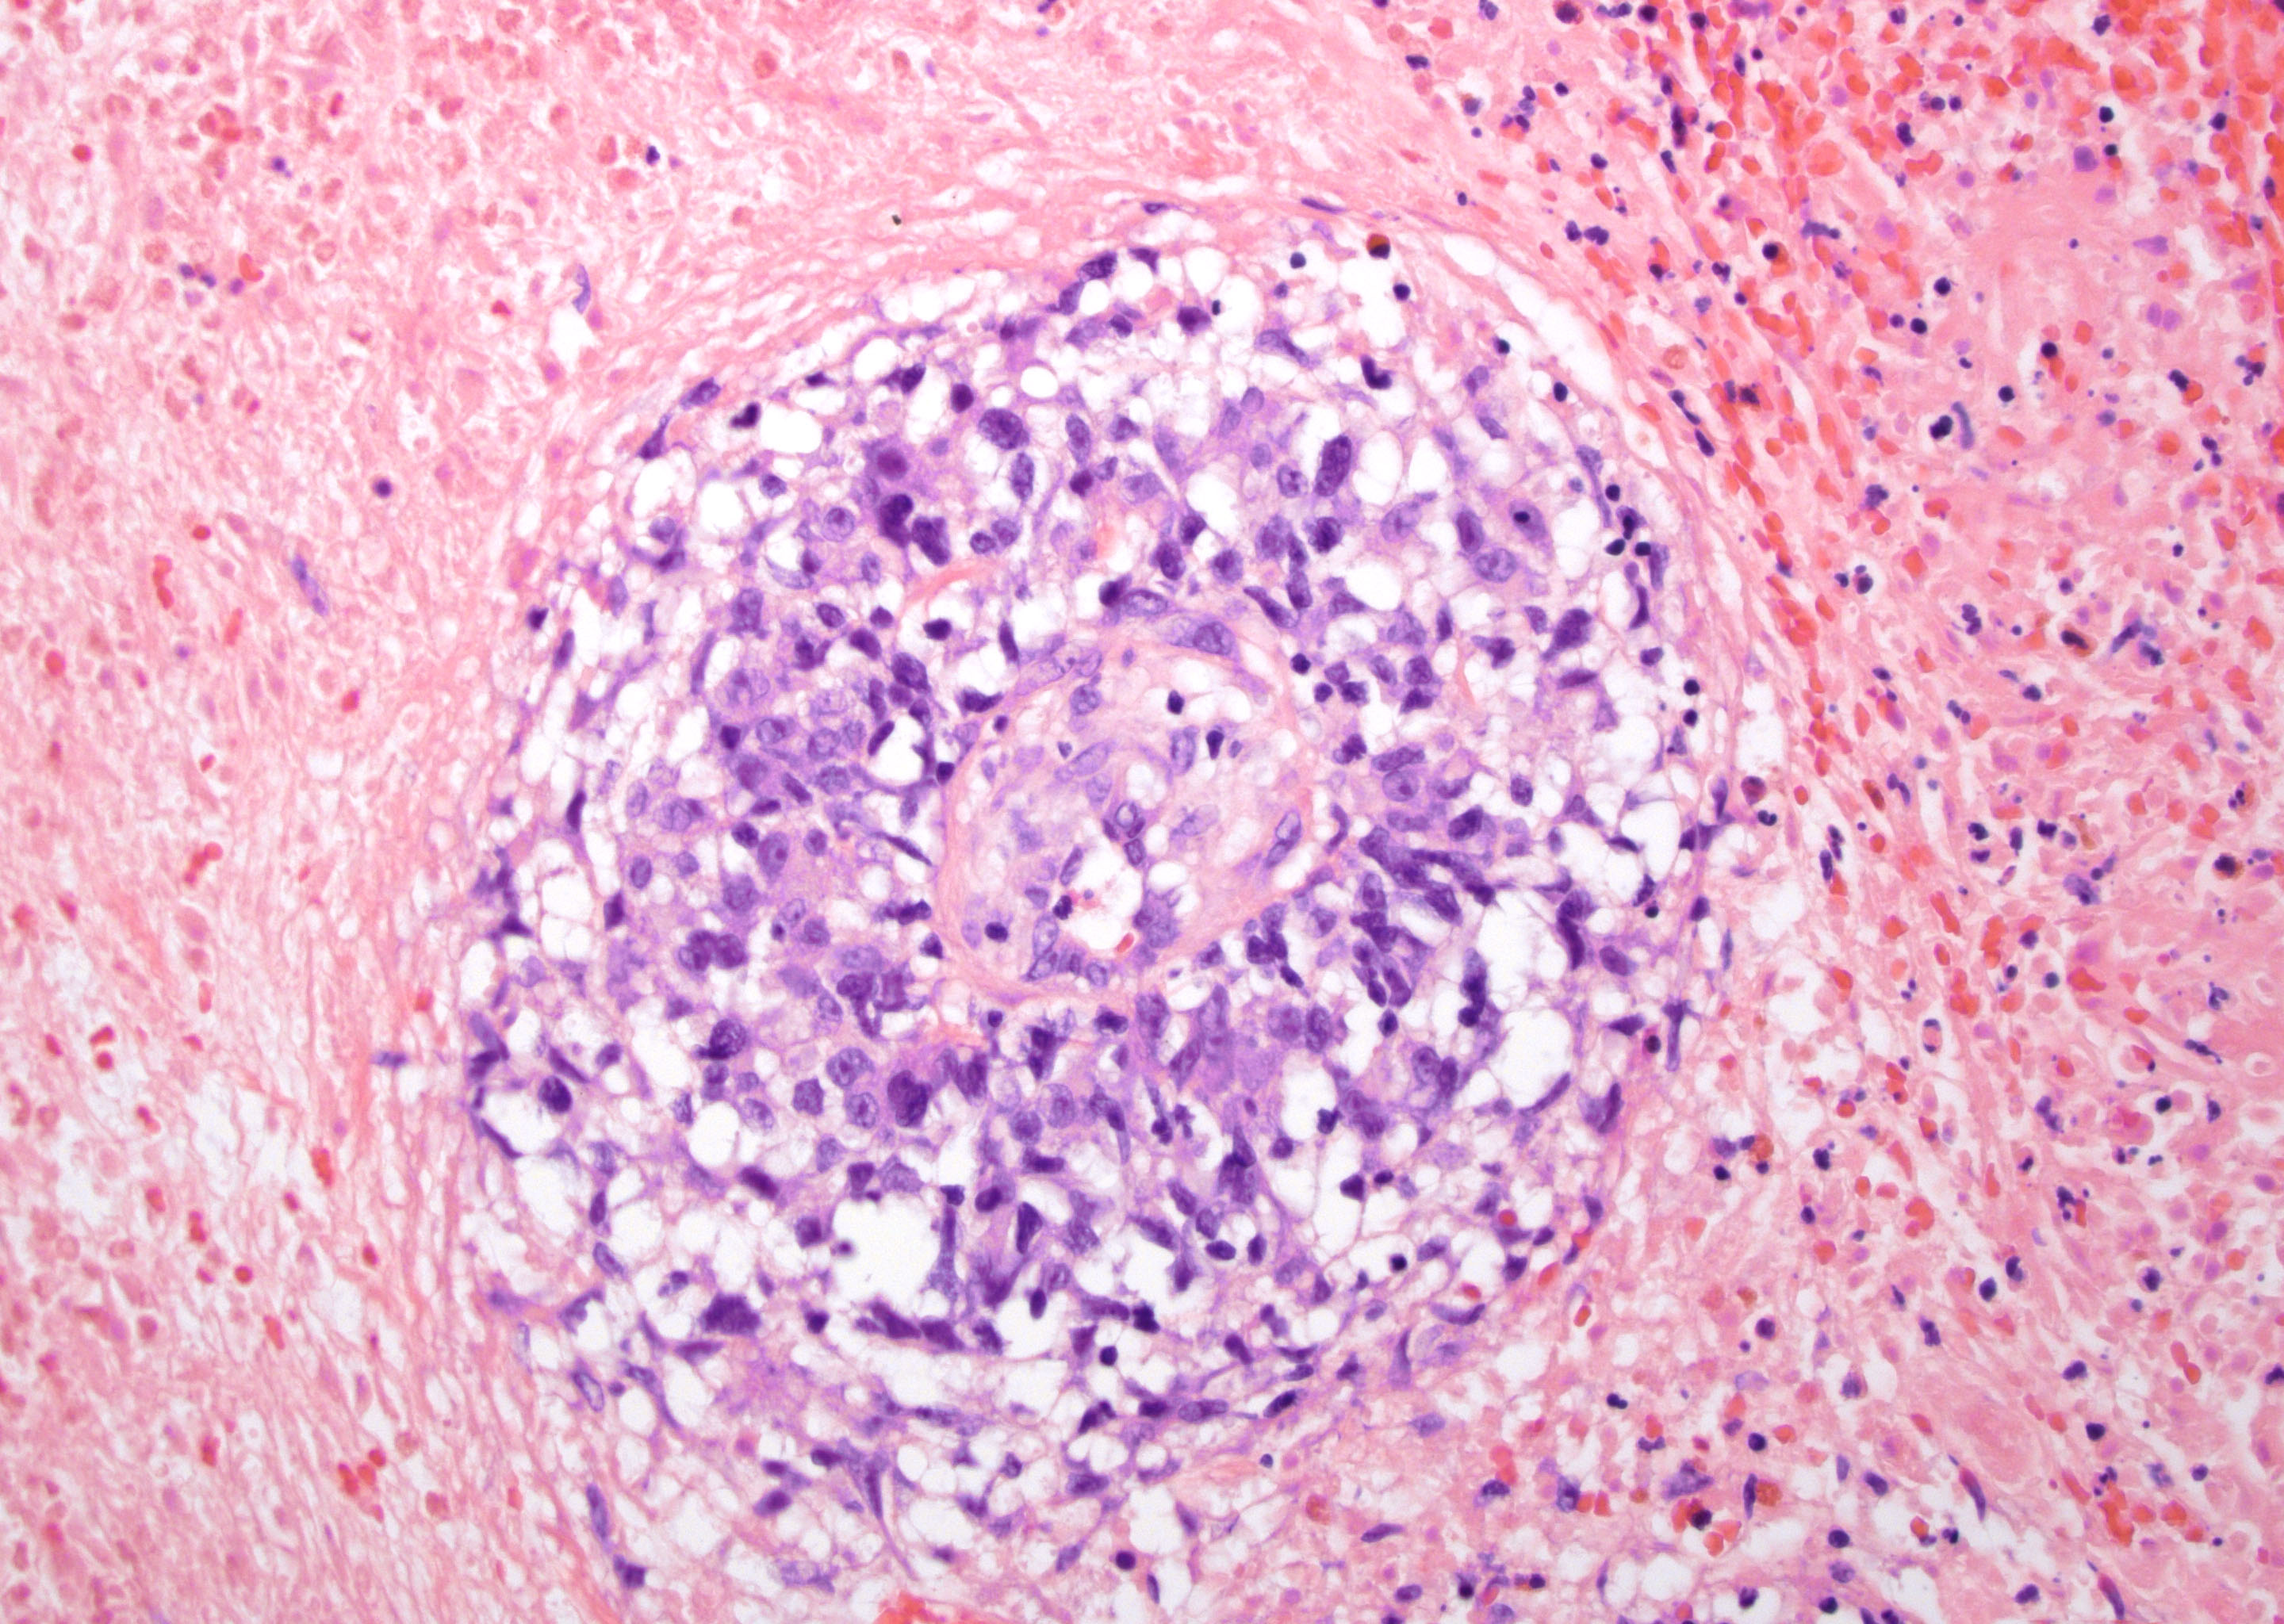 Respiratory papillomatosis pathology outlines Lymphoid papillomatosis pathology outlines